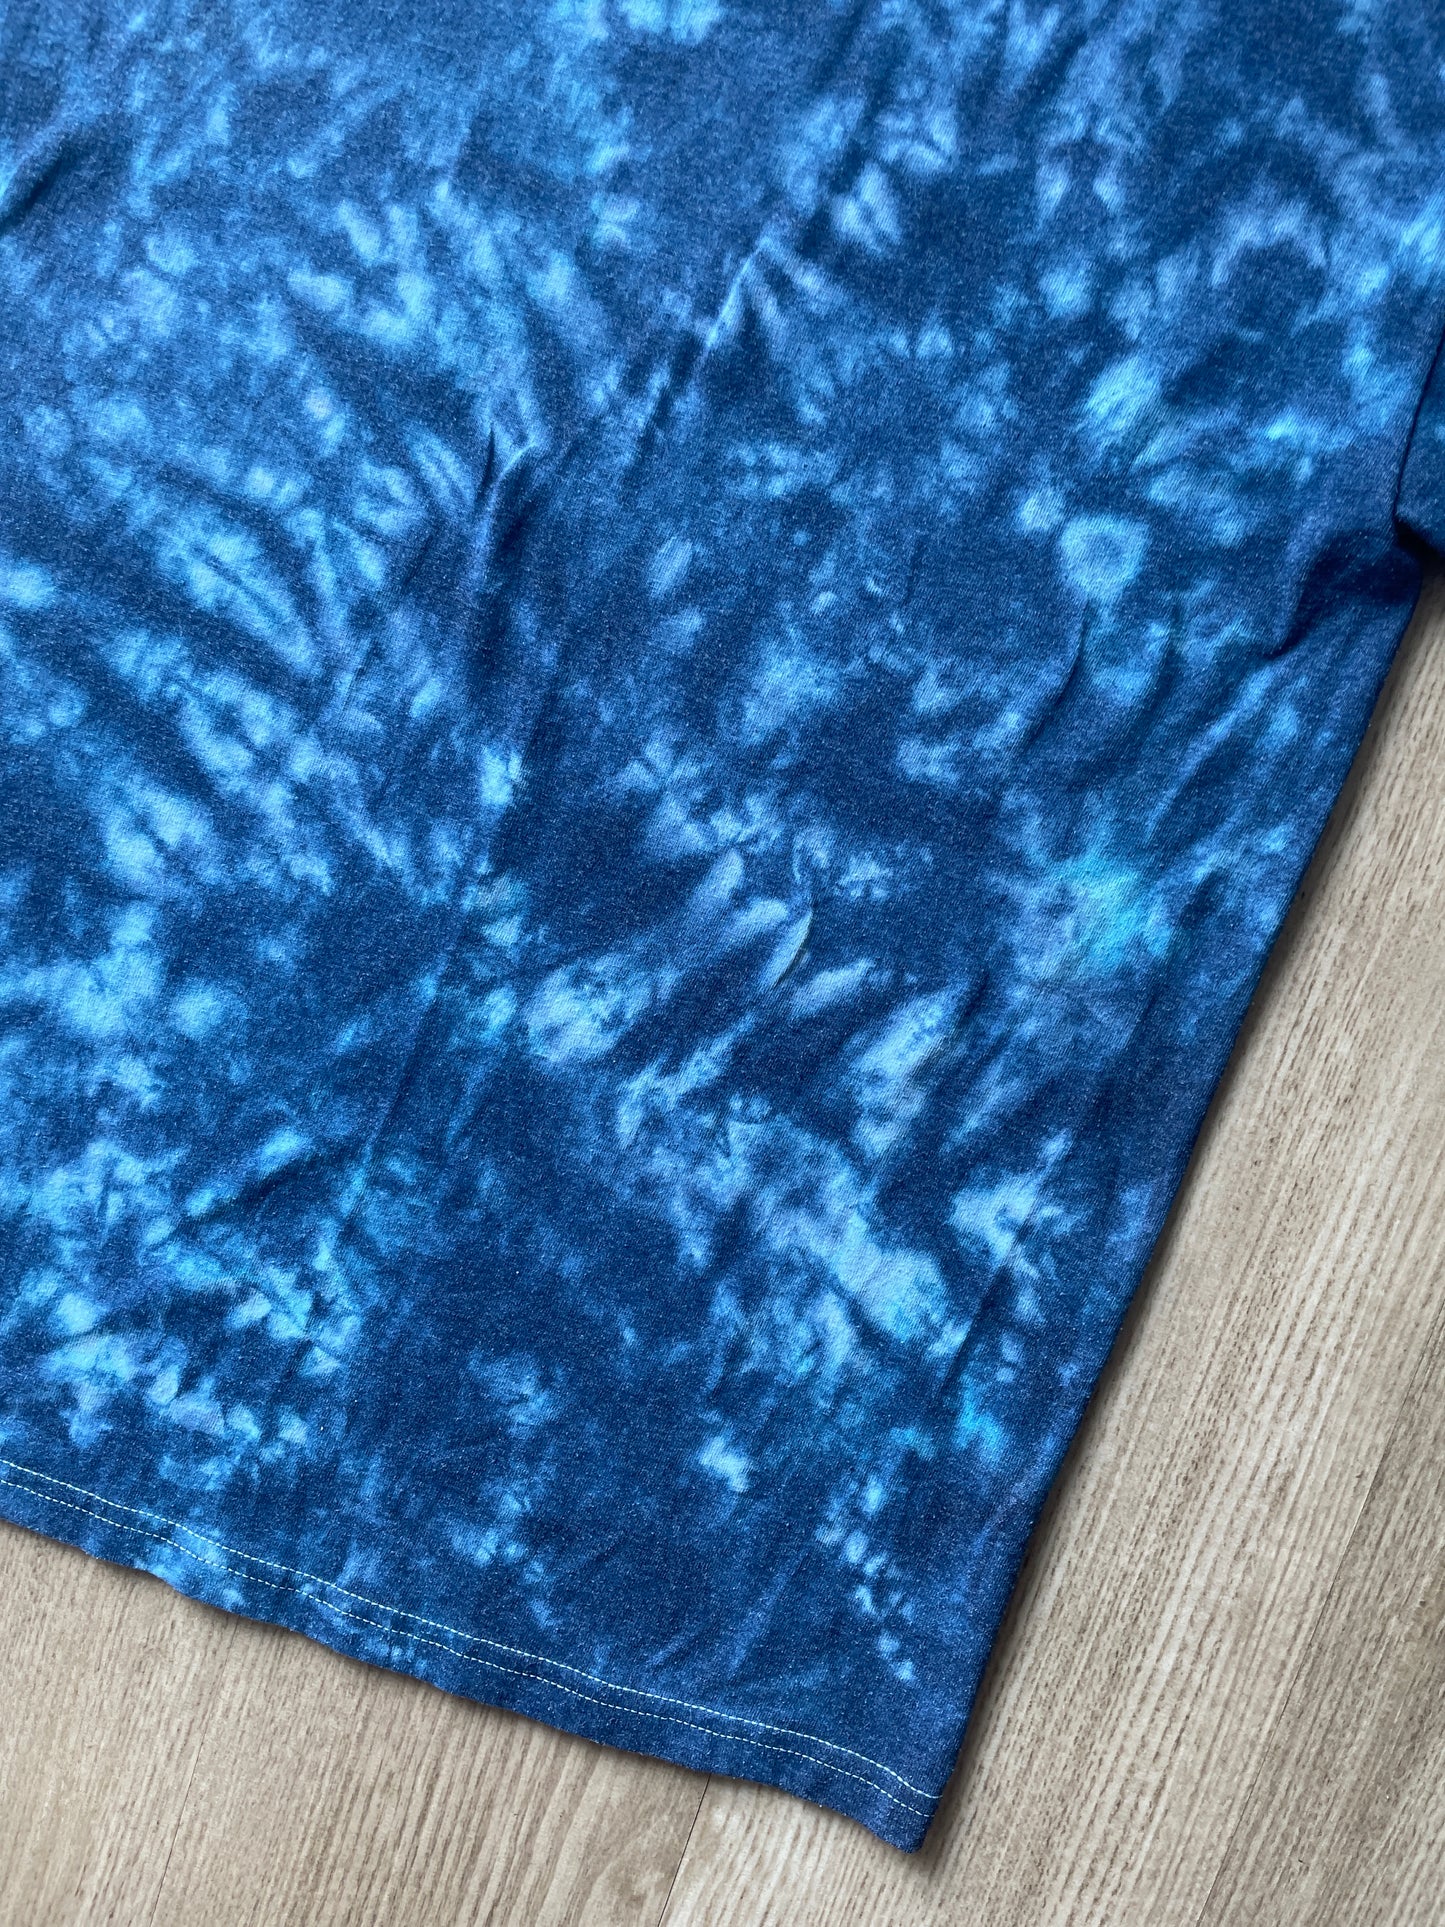 MEDIUM Men’s Monstera Leaf Tie Dye T-Shirt | One-Of-a-Kind Shades of Blue Crumpled Short Sleeve